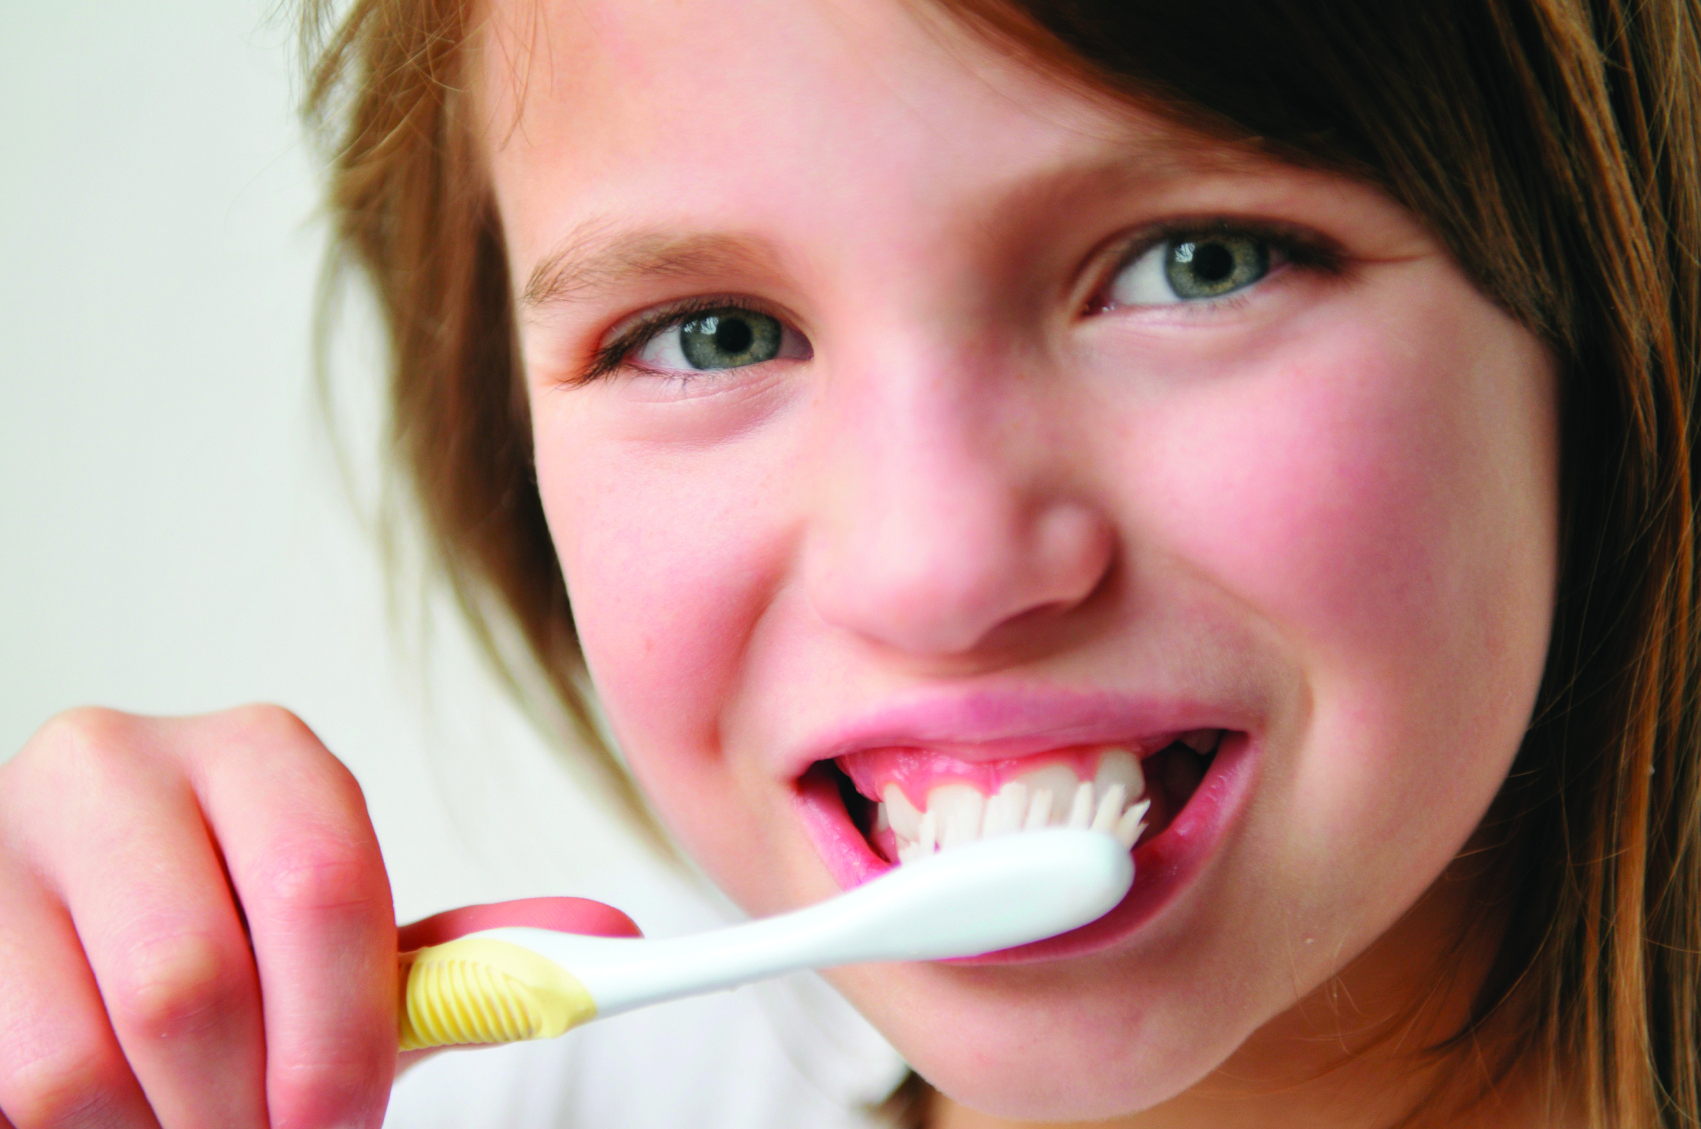 Girl Brushing Her Teeth Medium Prettygate Dental